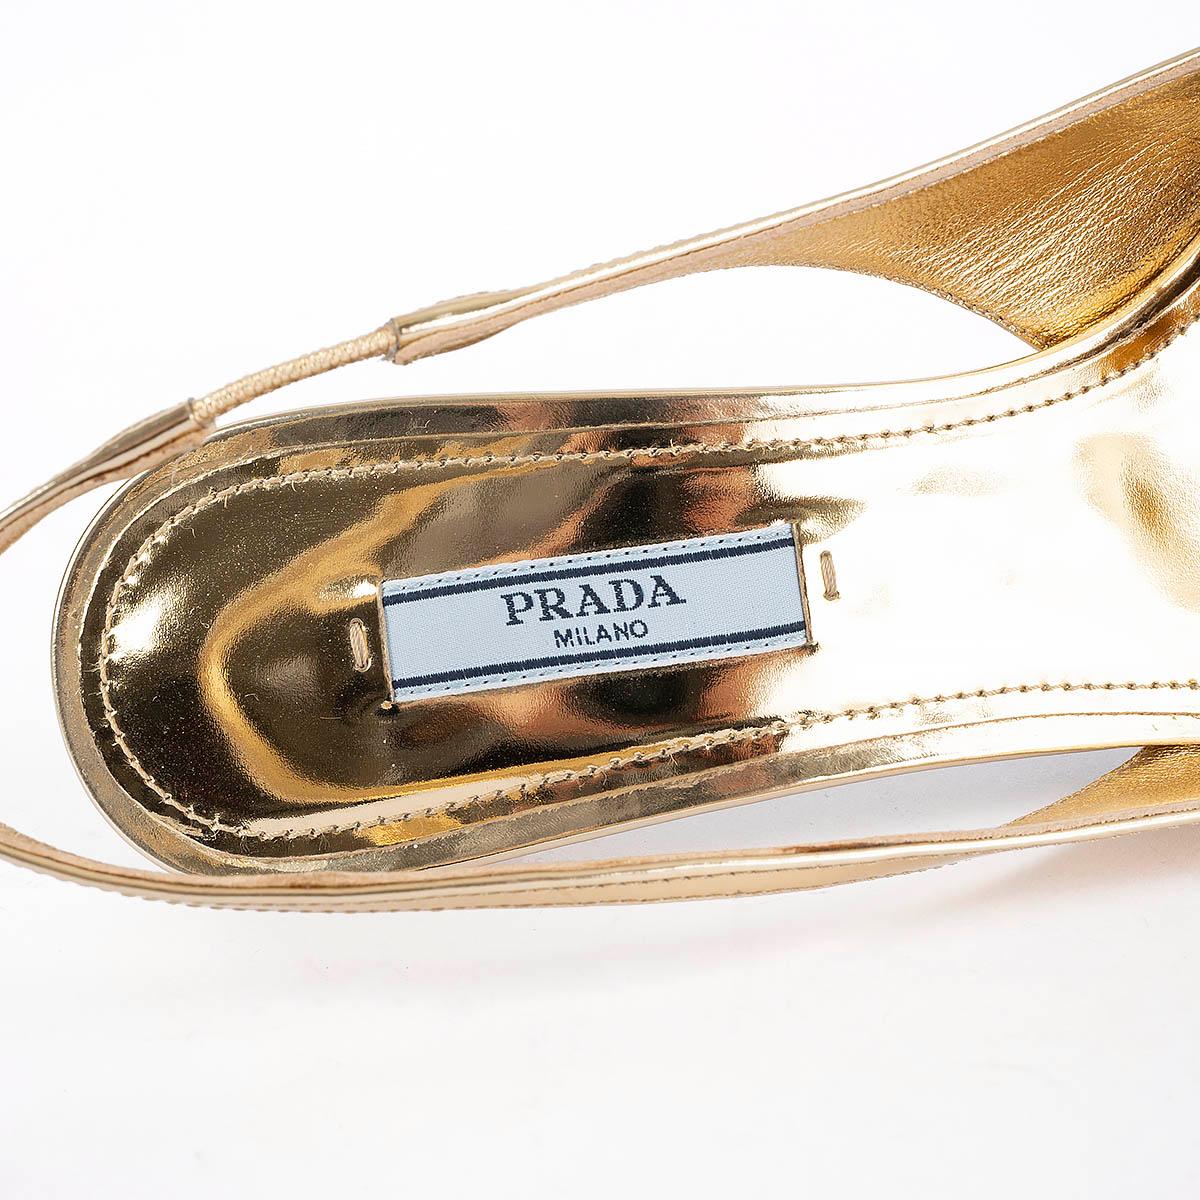 PRADA metallic gold leather Slingbacks Pumps Shoes 37 5